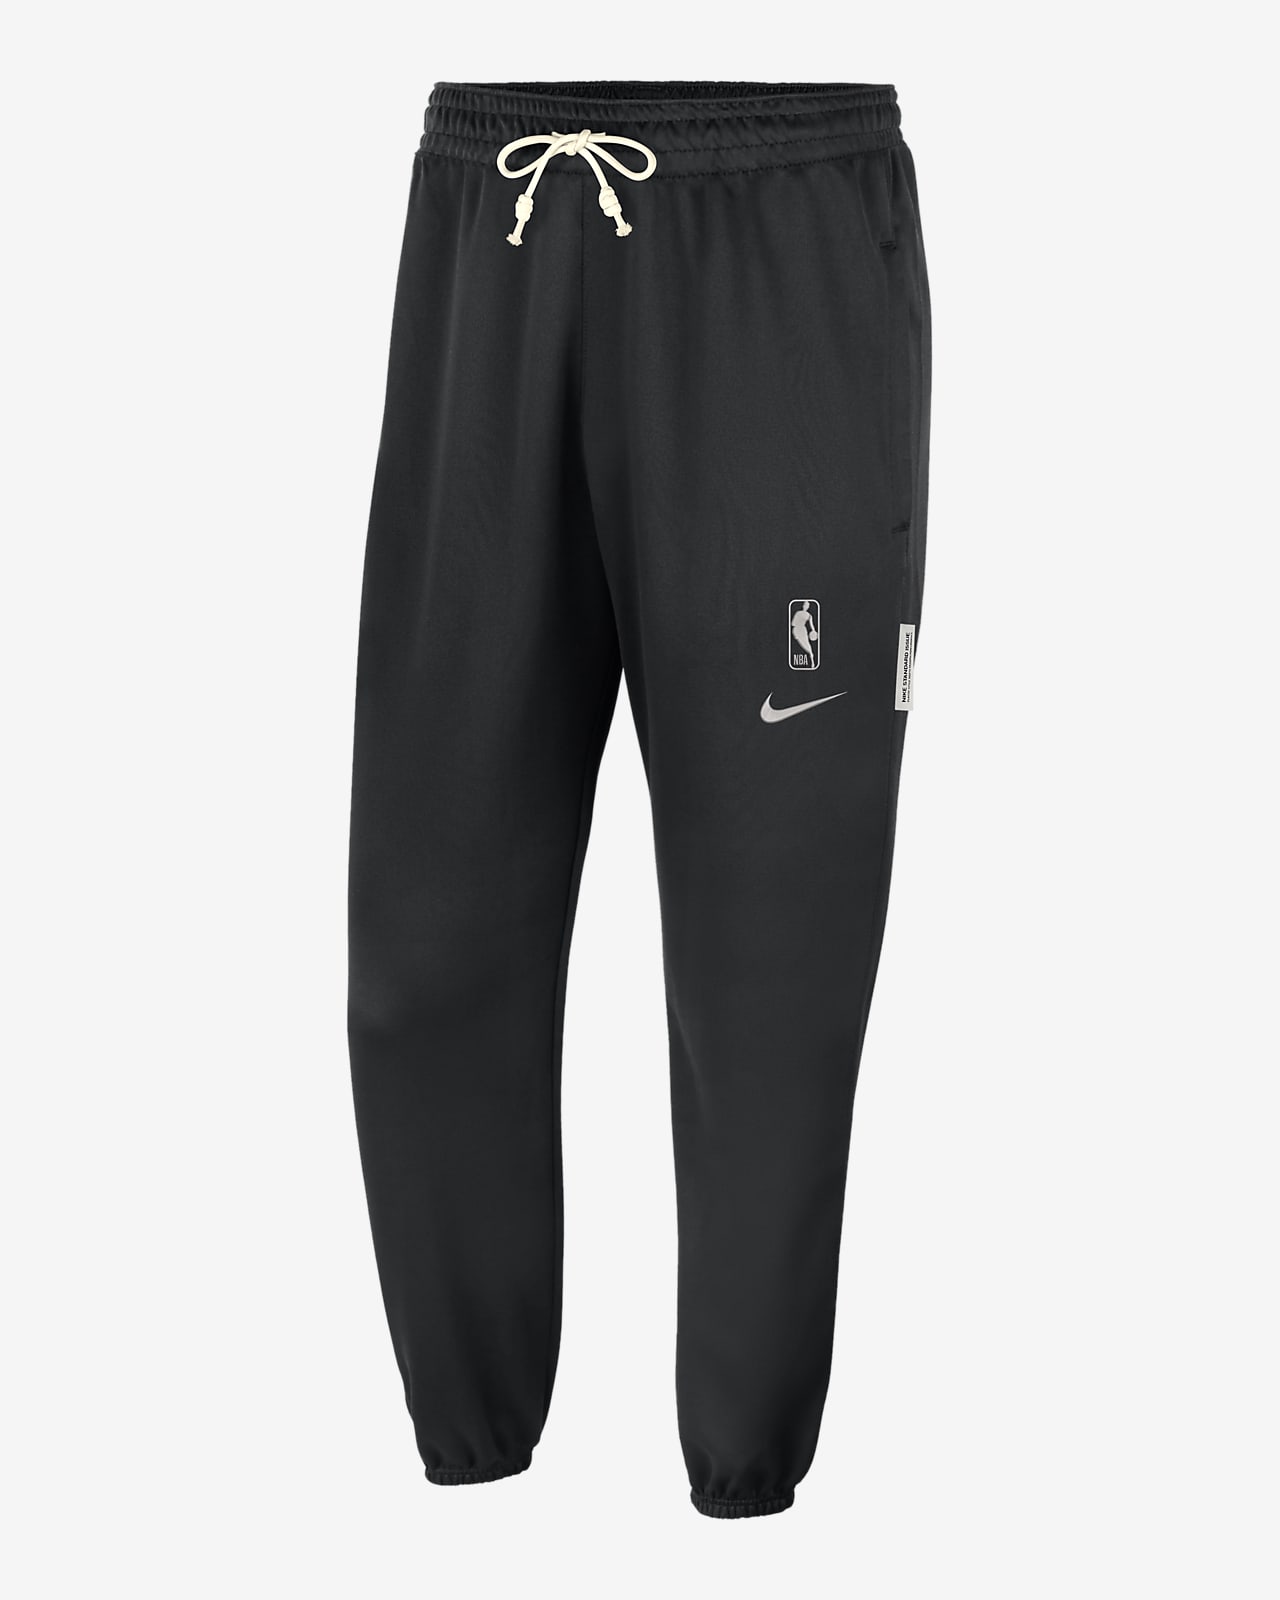 Team 31 Standard Issue Pantalons Nike Dri-FIT NBA - Home